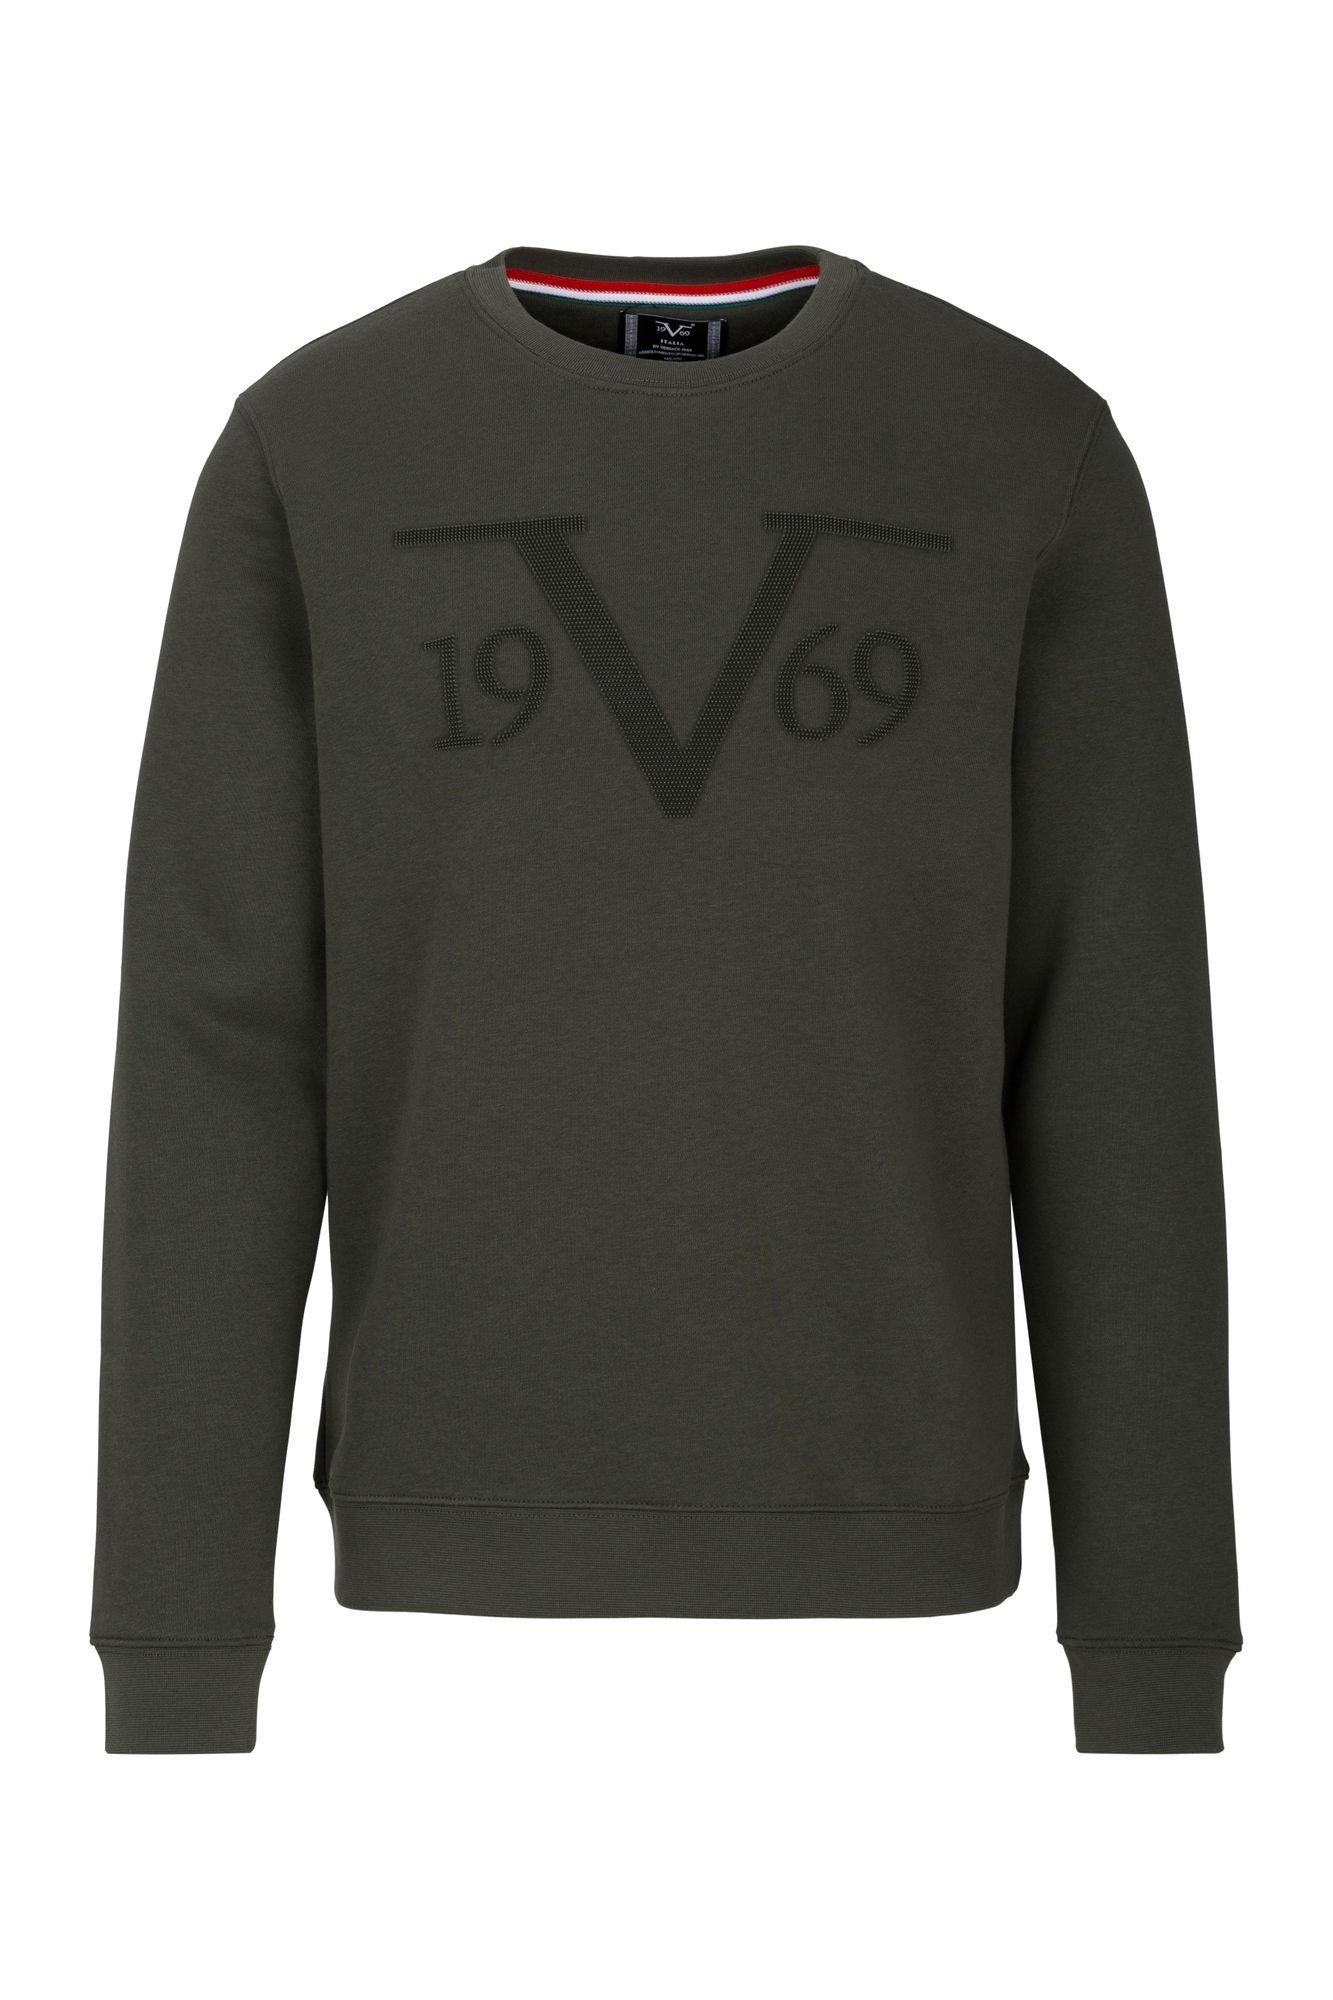 Sweatshirt Versace - by by Versace 19V69 Sportivo Italia Giorgio SRL